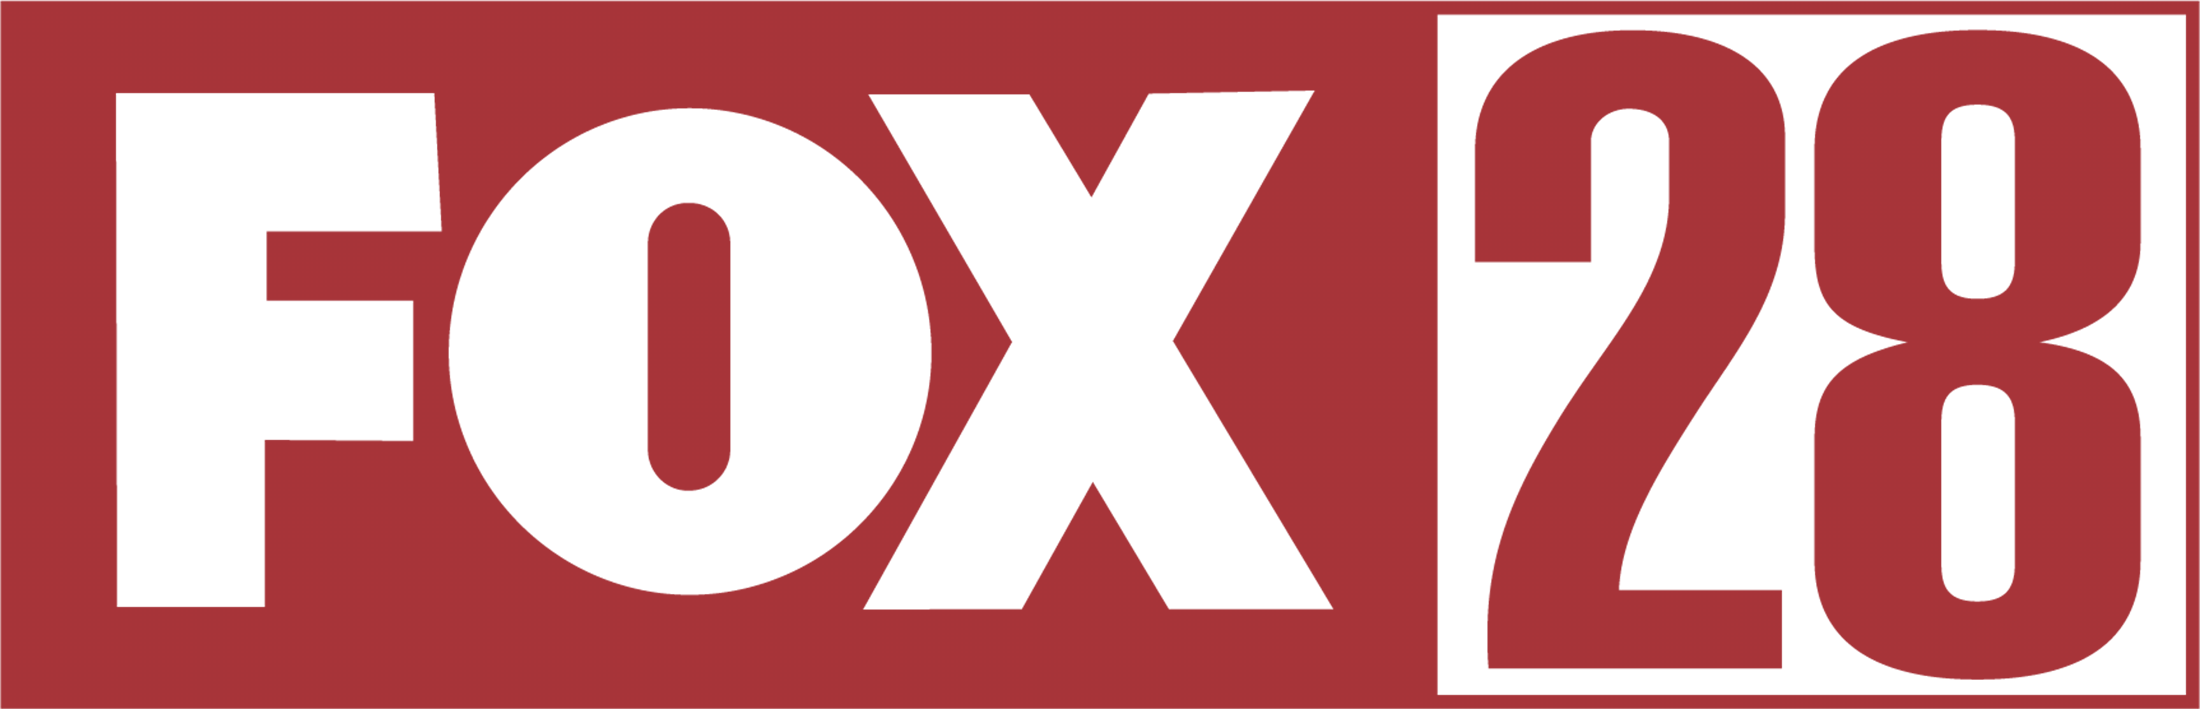 Fox 28